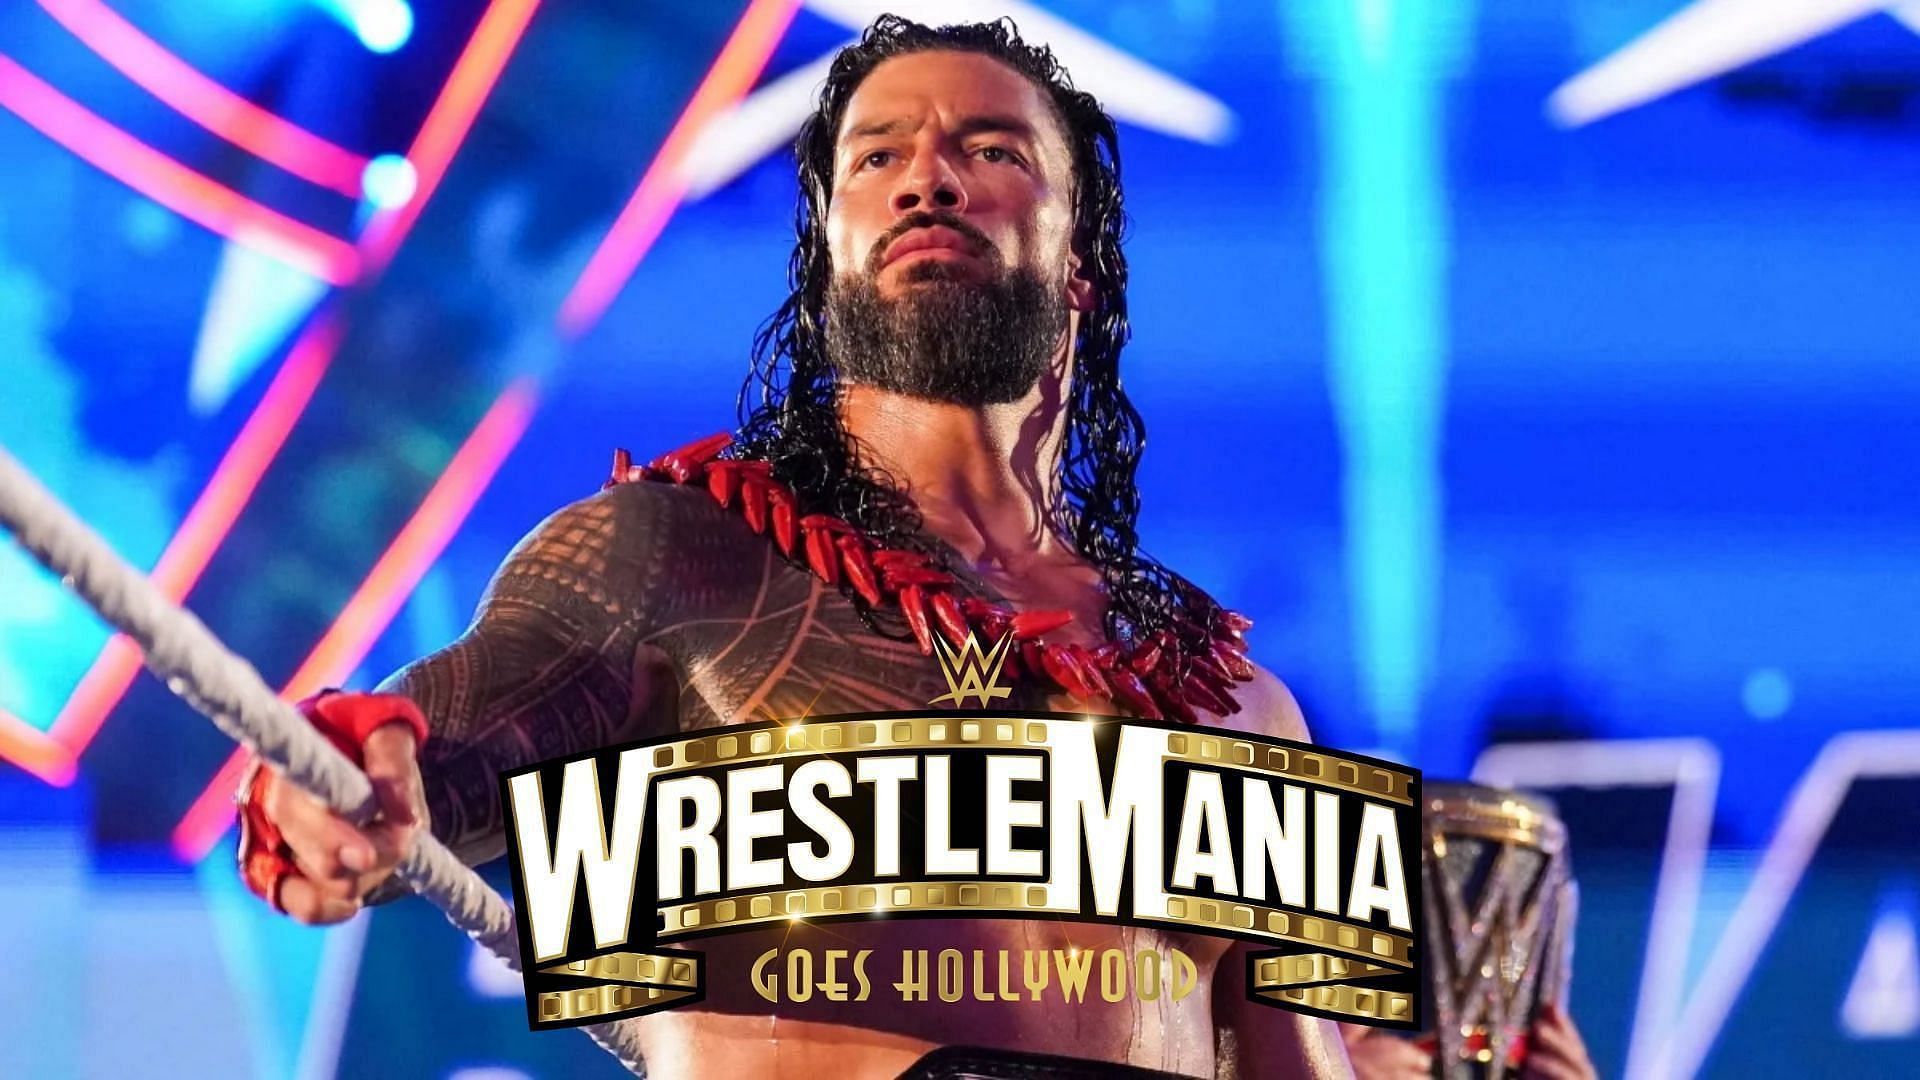 Roman Reigns will headline WrestleMania